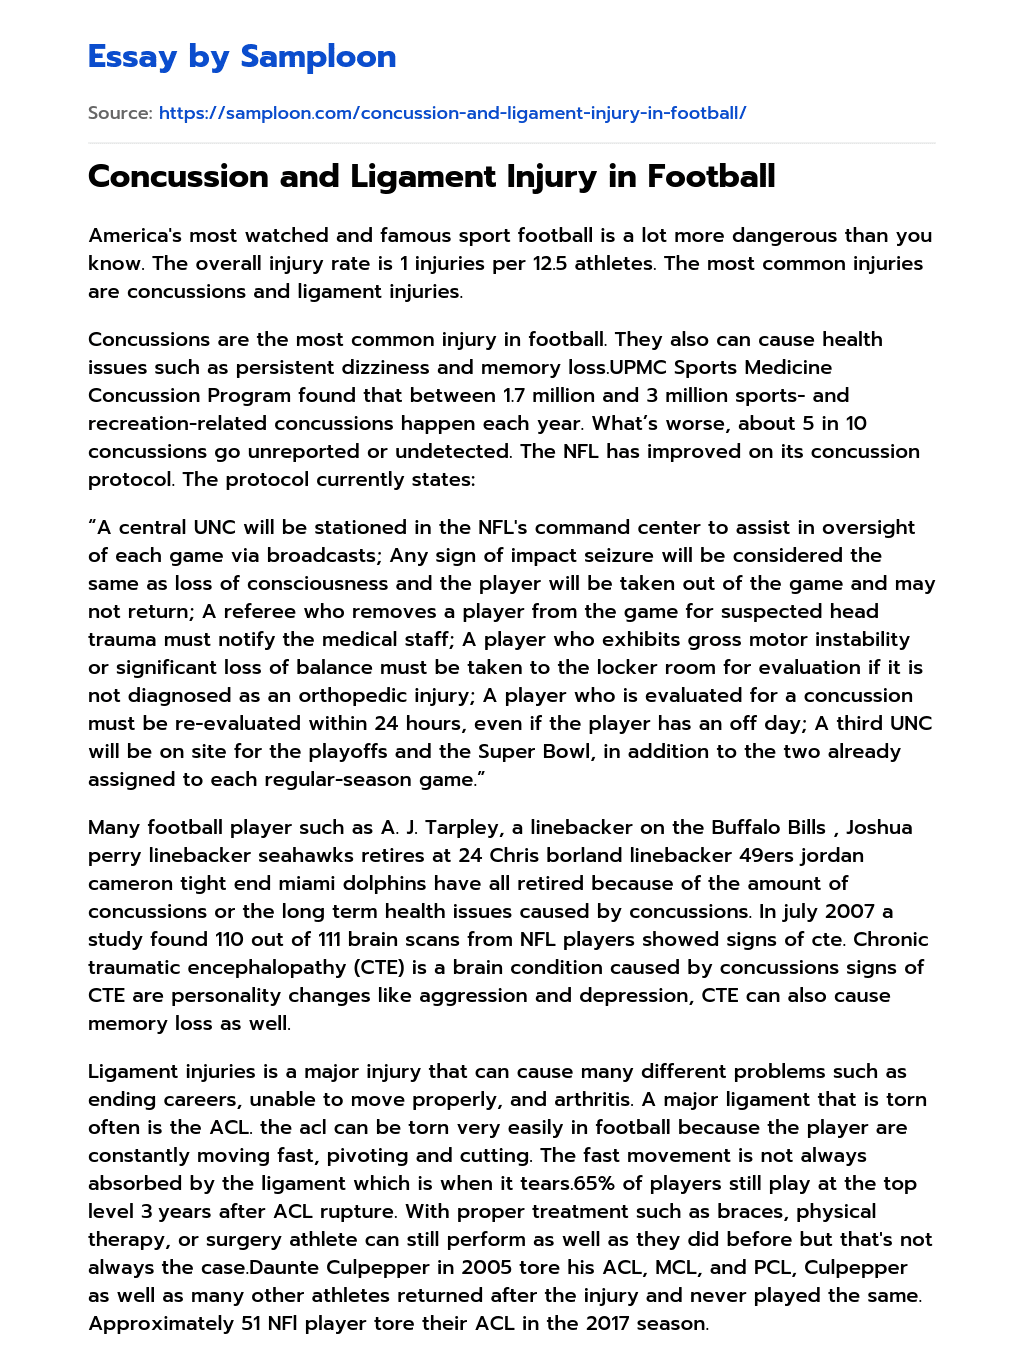 argumentative essay on football concussions